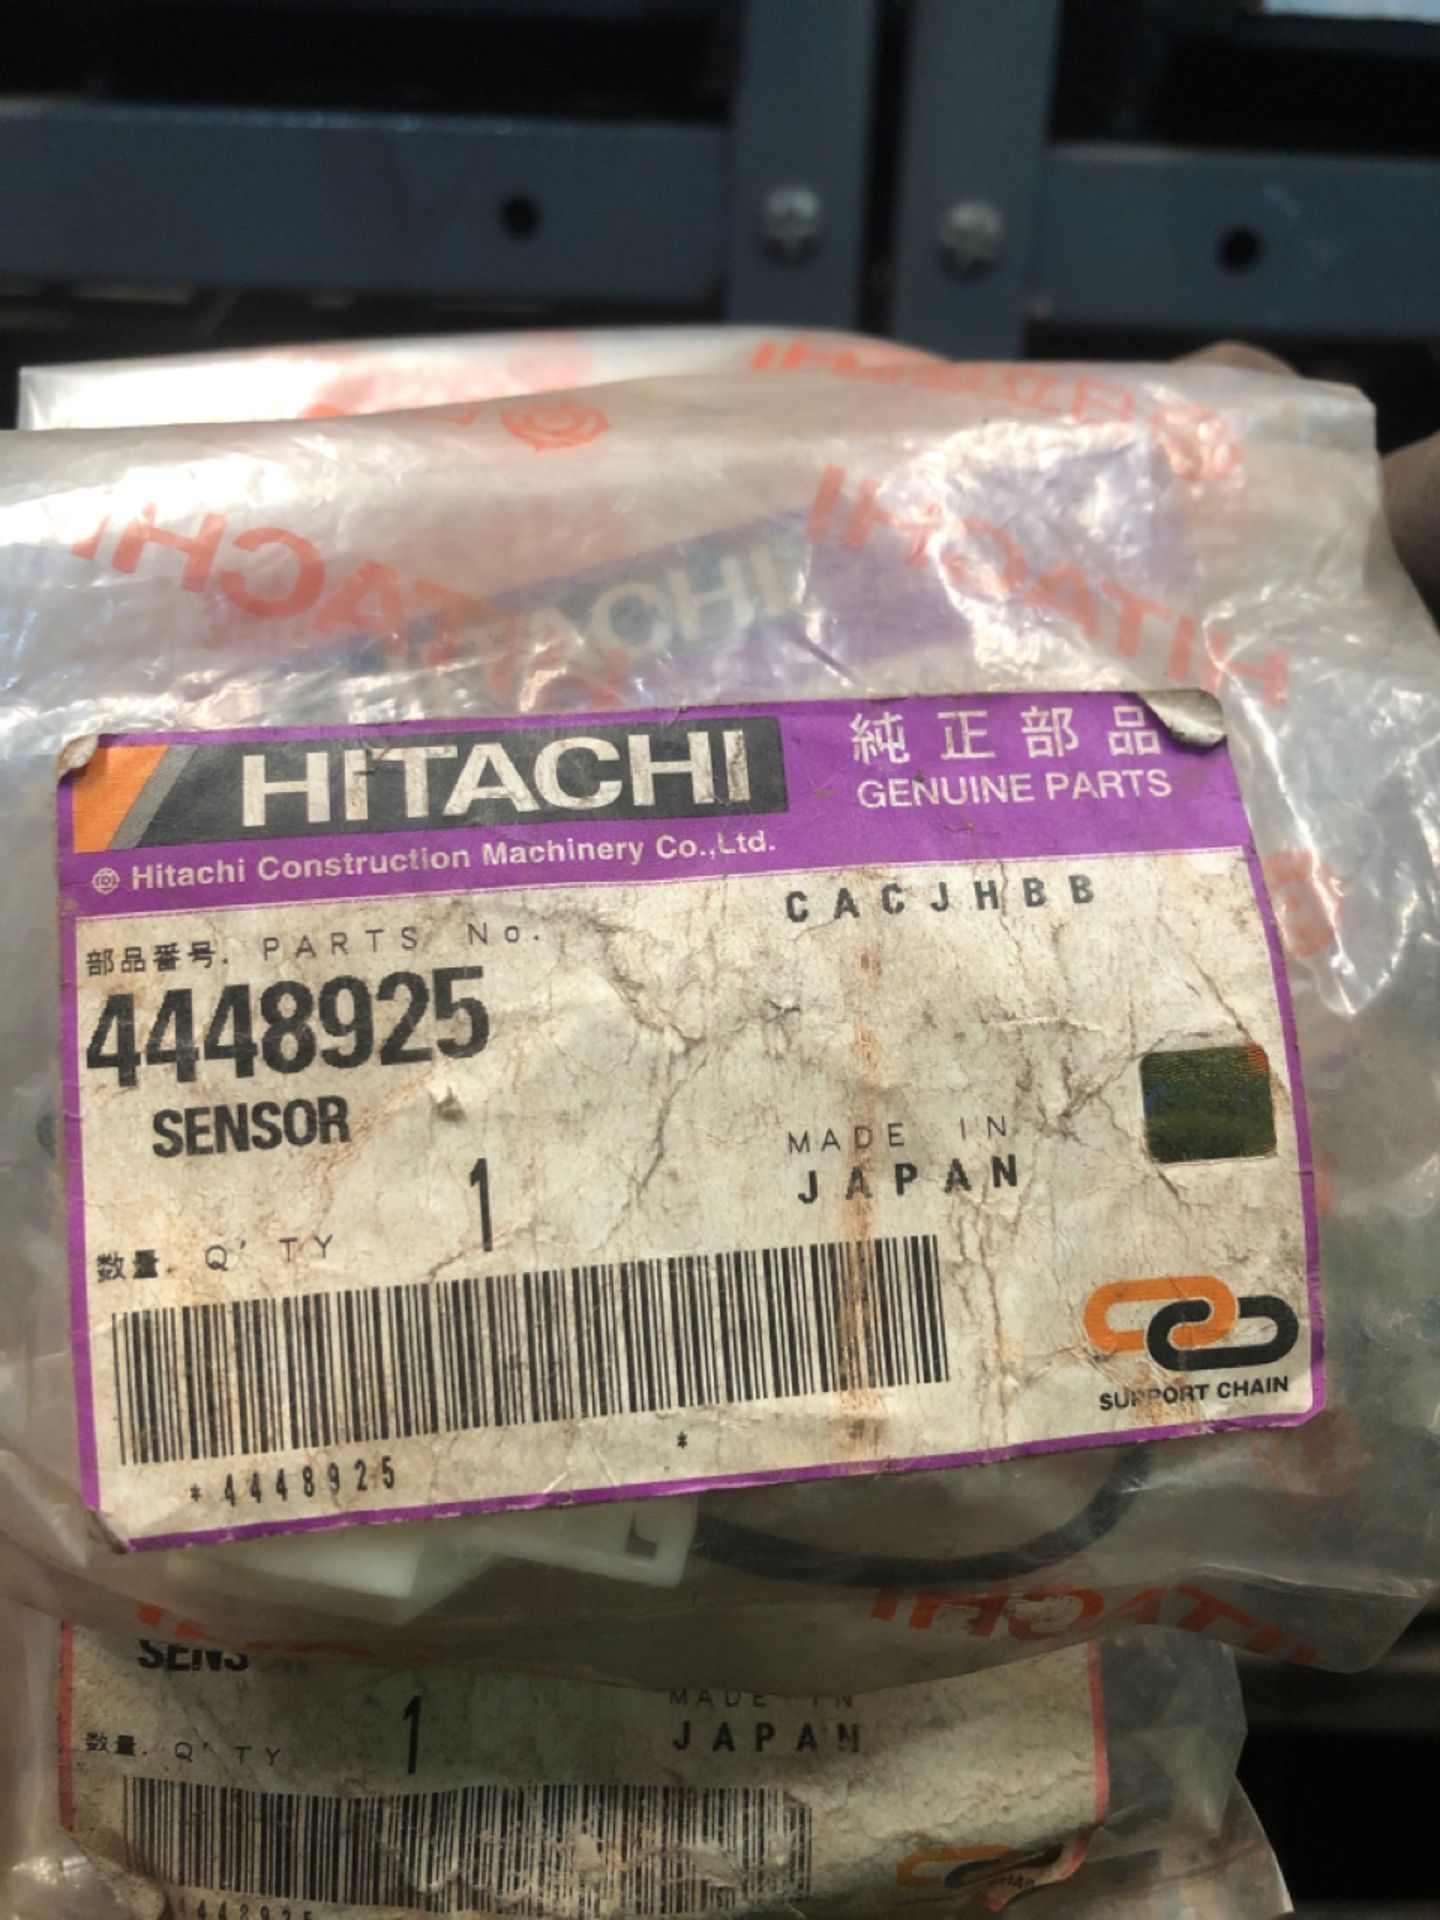 HITACHI MINING ZX350 PARTS - Image 70 of 79